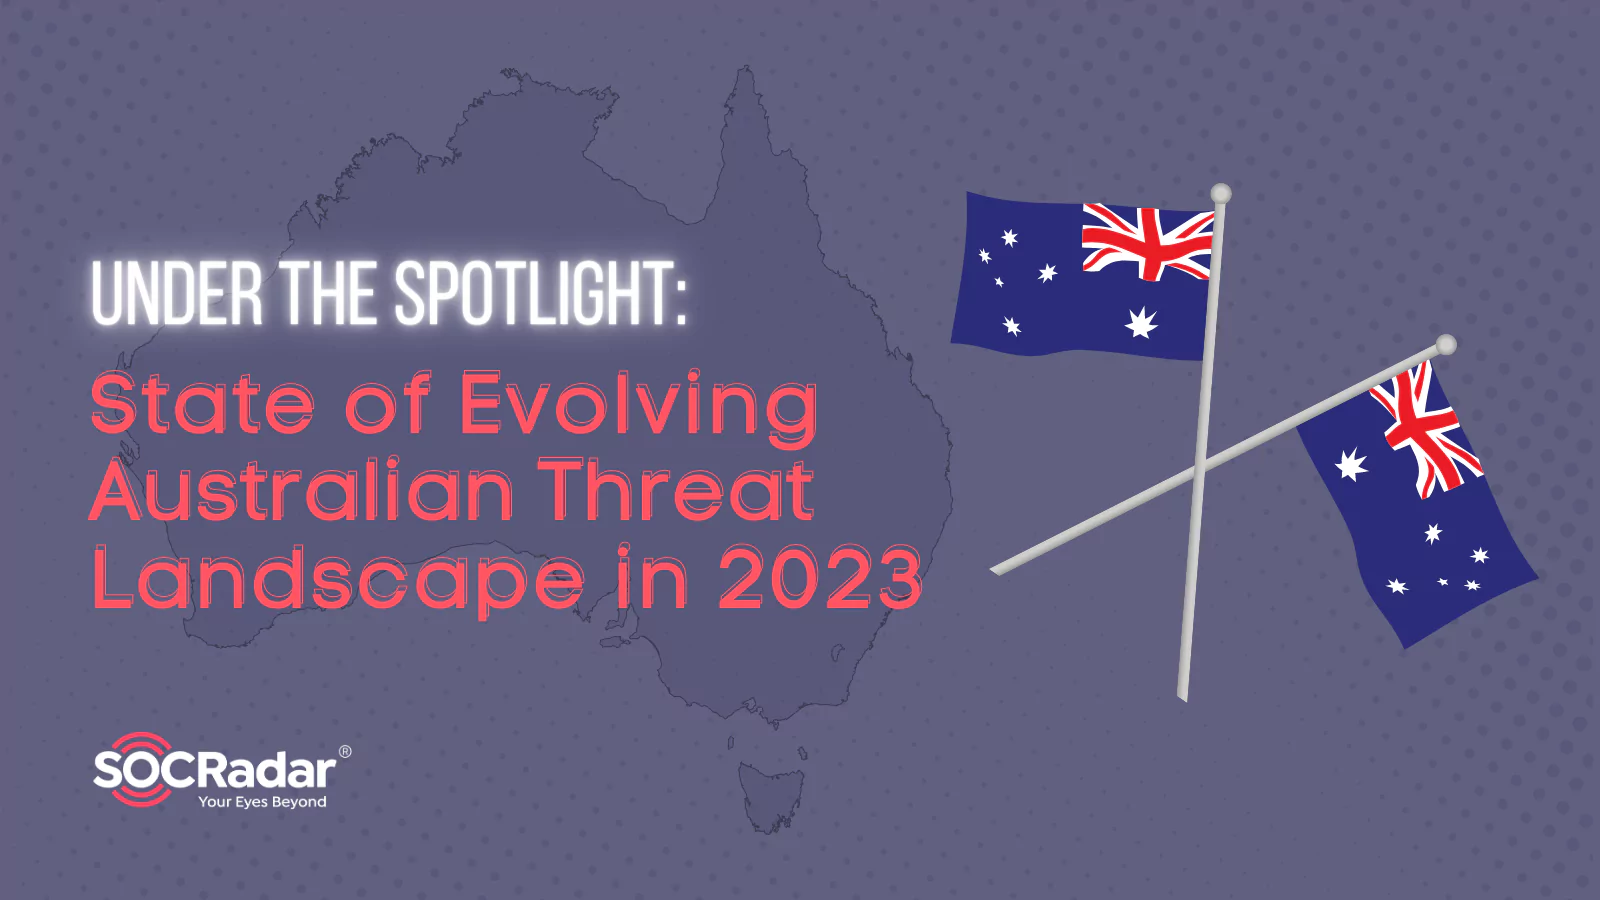 SOCRadar® Cyber Intelligence Inc. | Under the Spotlight: State of Evolving Australian Threat Landscape in 2023